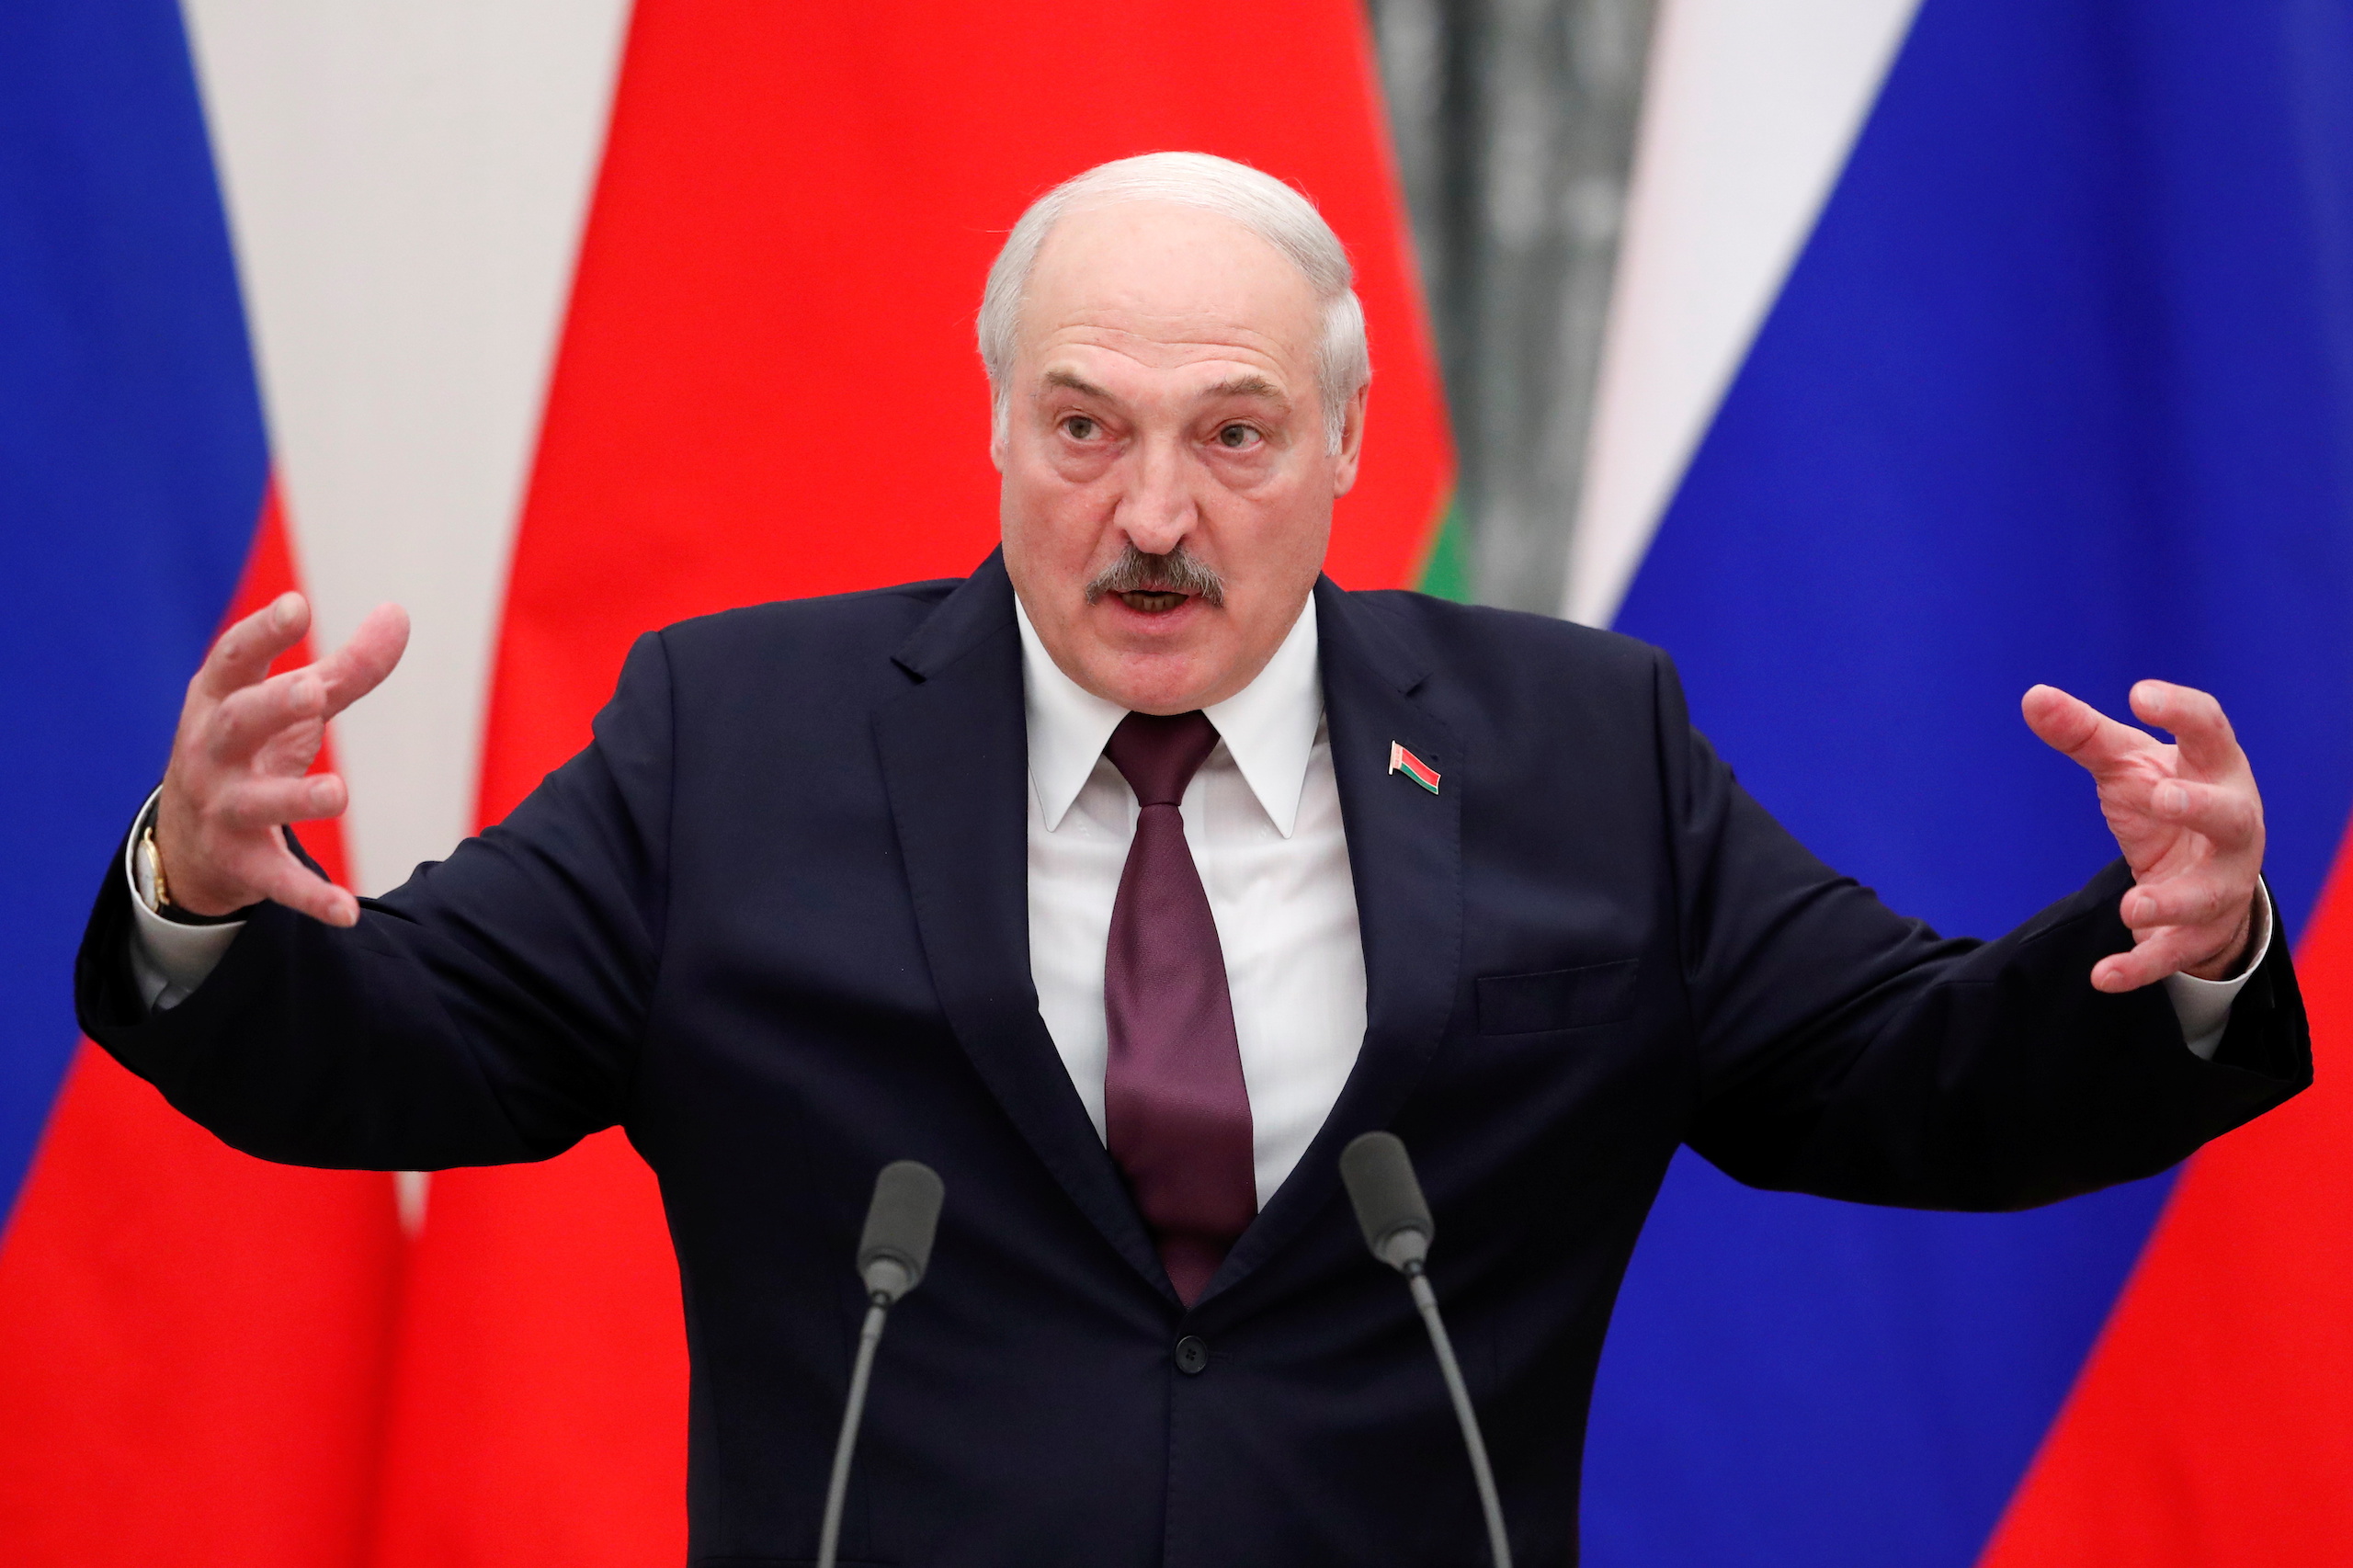 Belarusian President Alexander Lukashenko speaks during a news conference